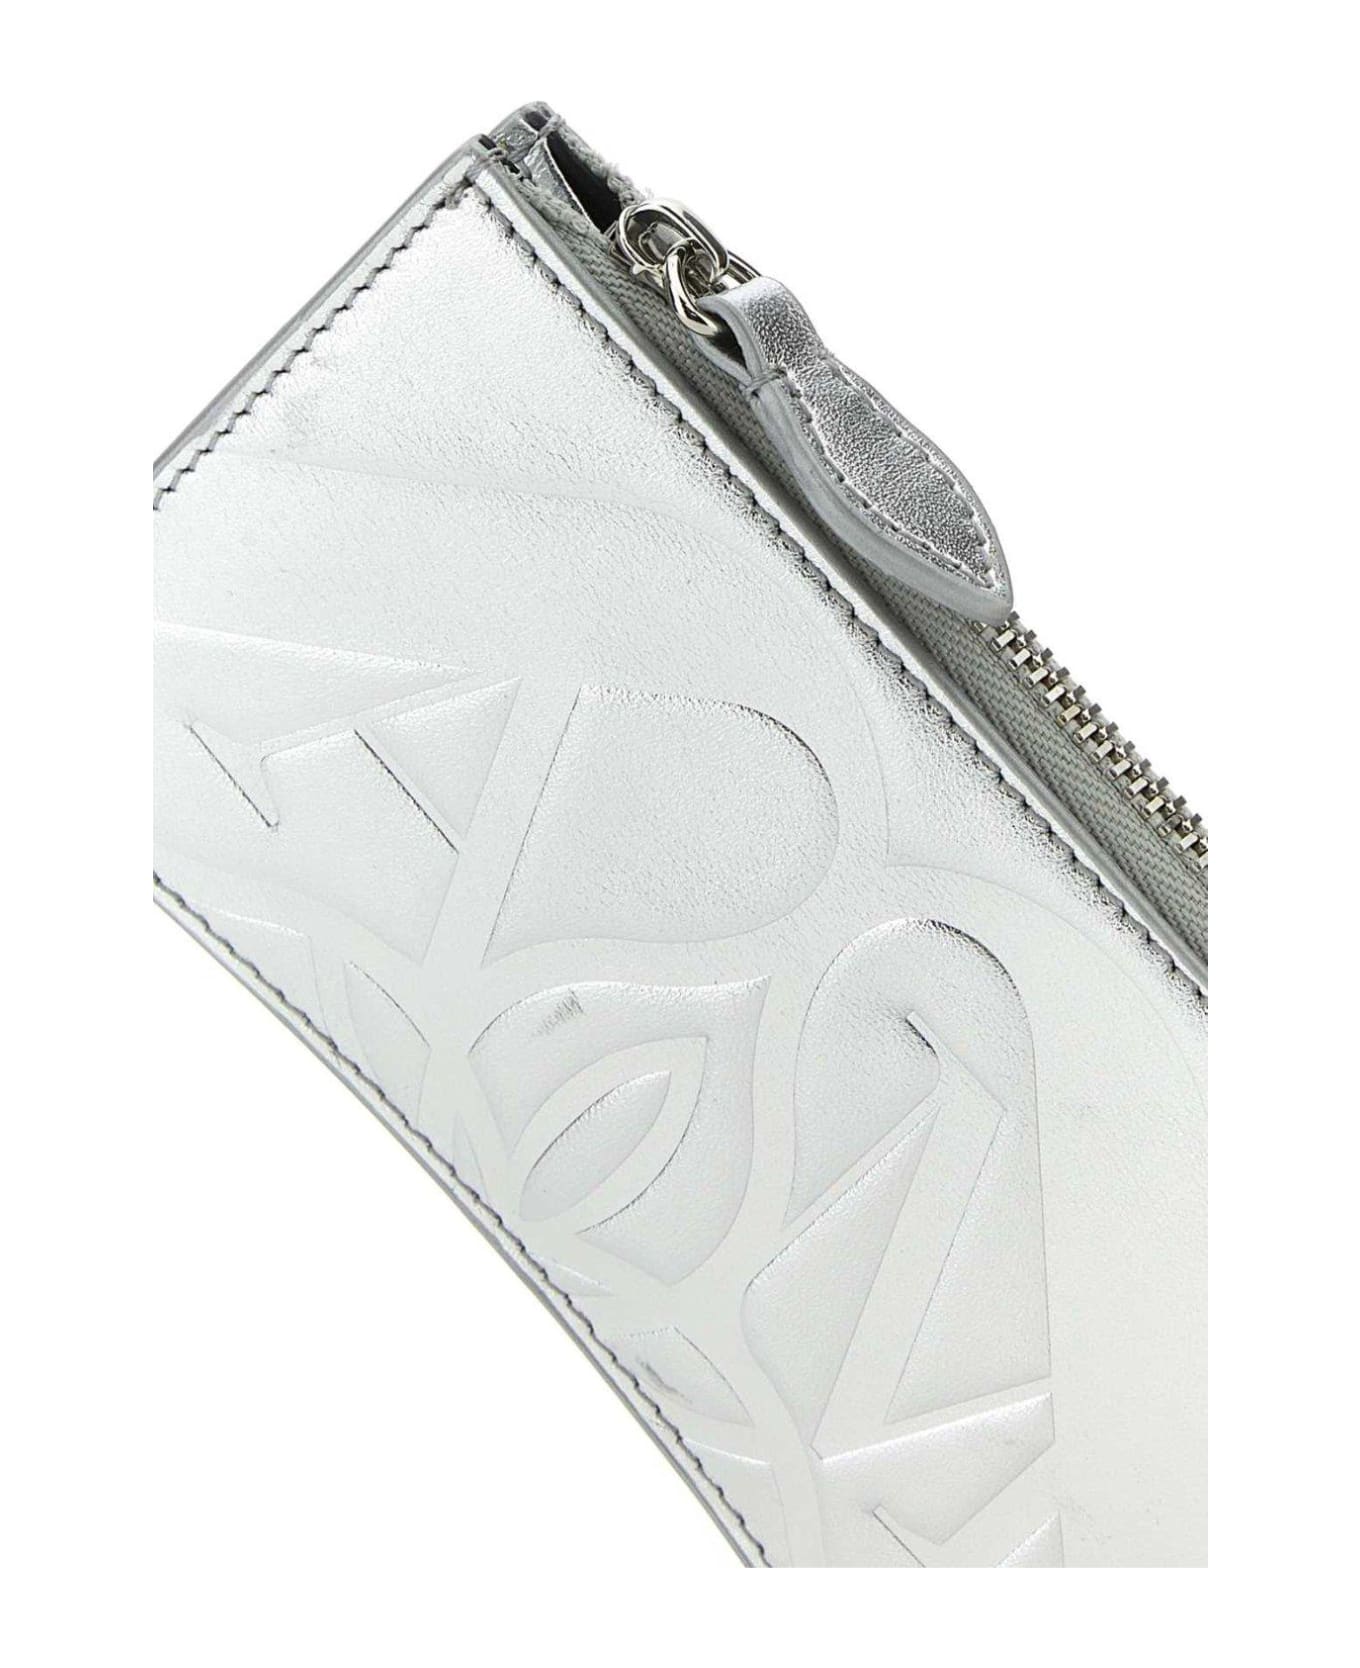 Alexander McQueen Zipped Wallet - Argento 財布